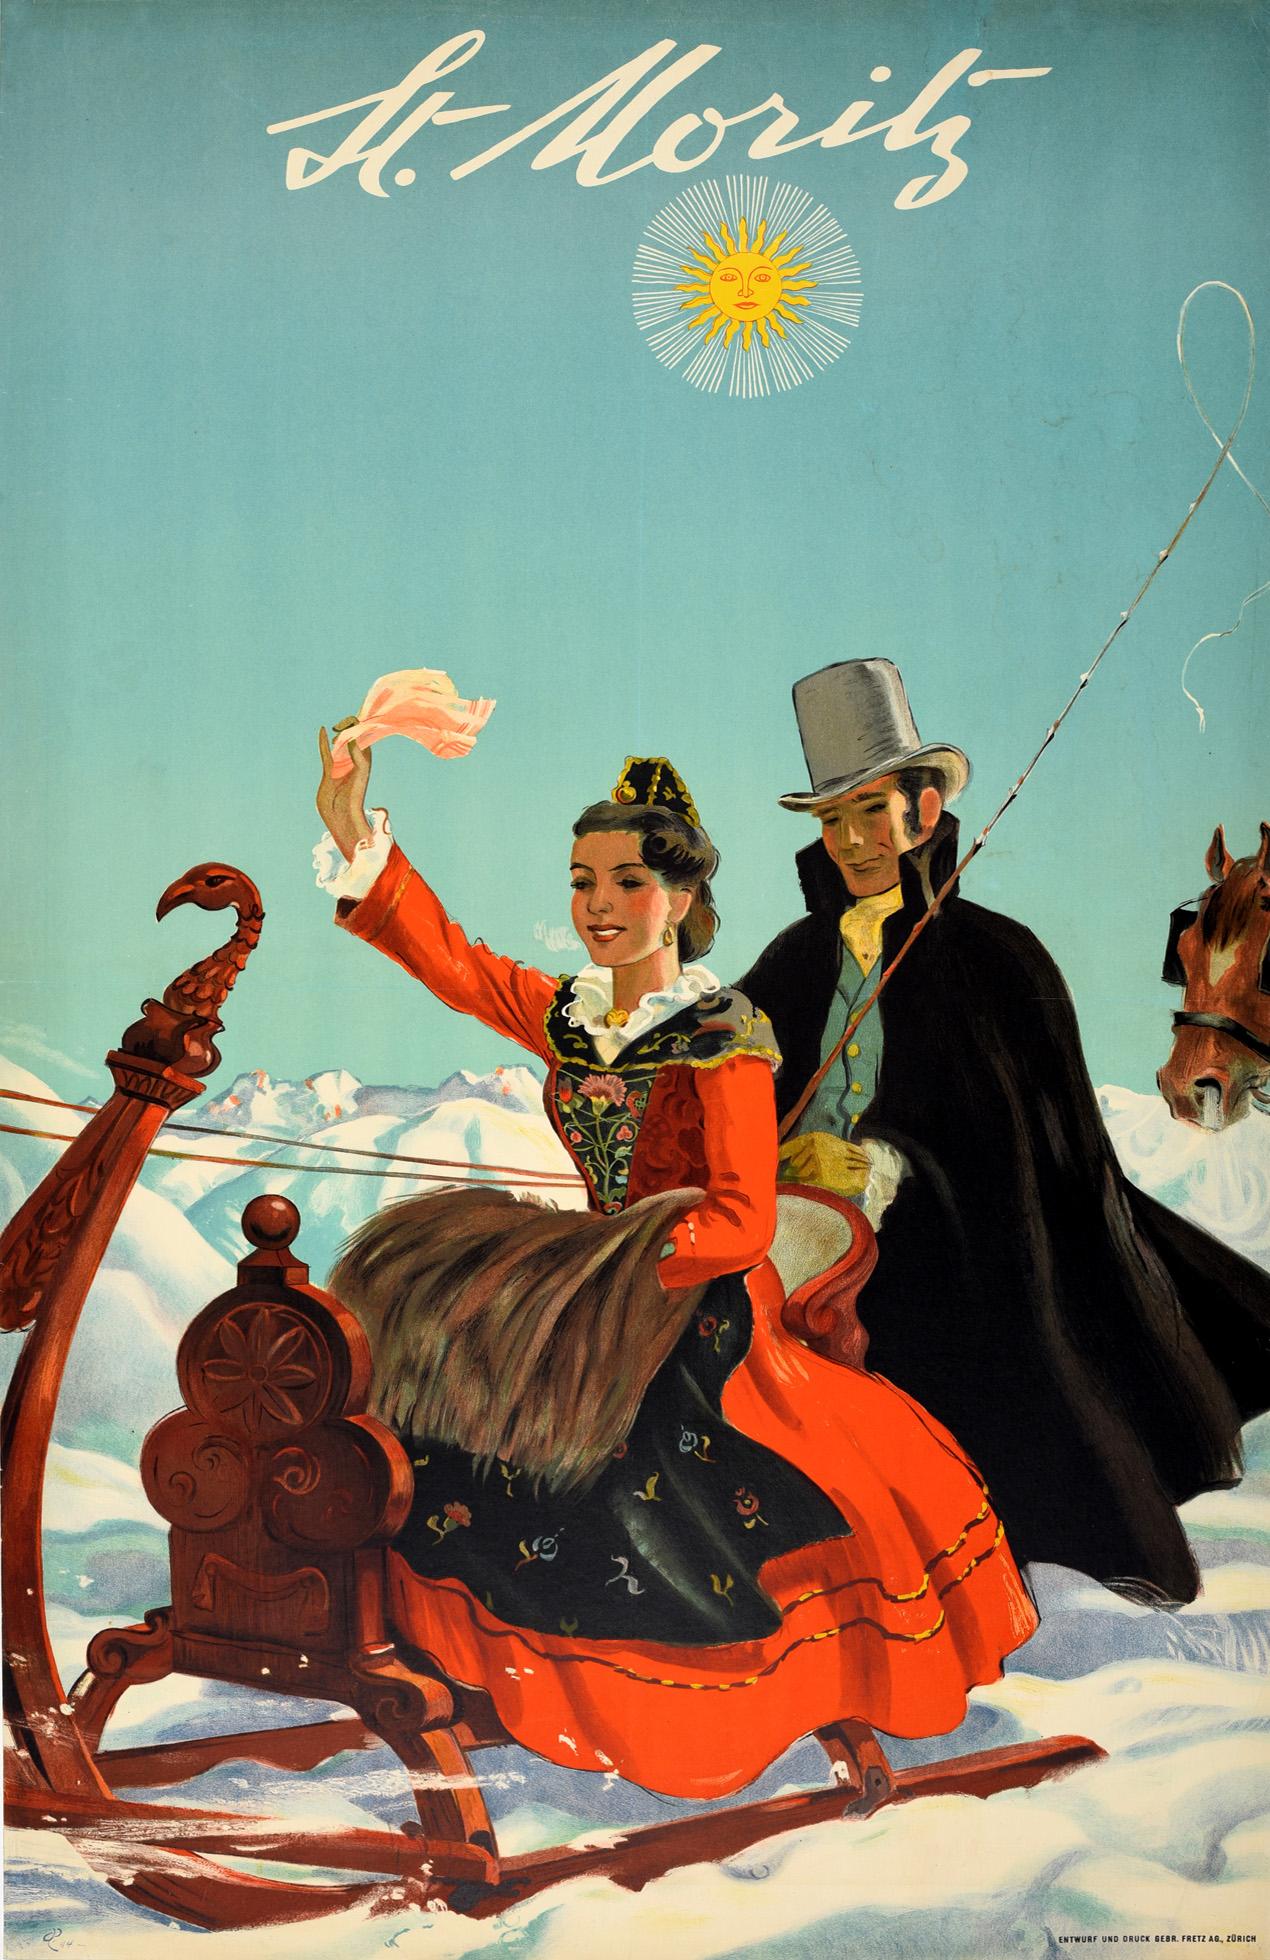 Hugo Laubi Print - Original Vintage Poster St Moritz Switzerland Swiss Alps Travel Horse Sleigh Art